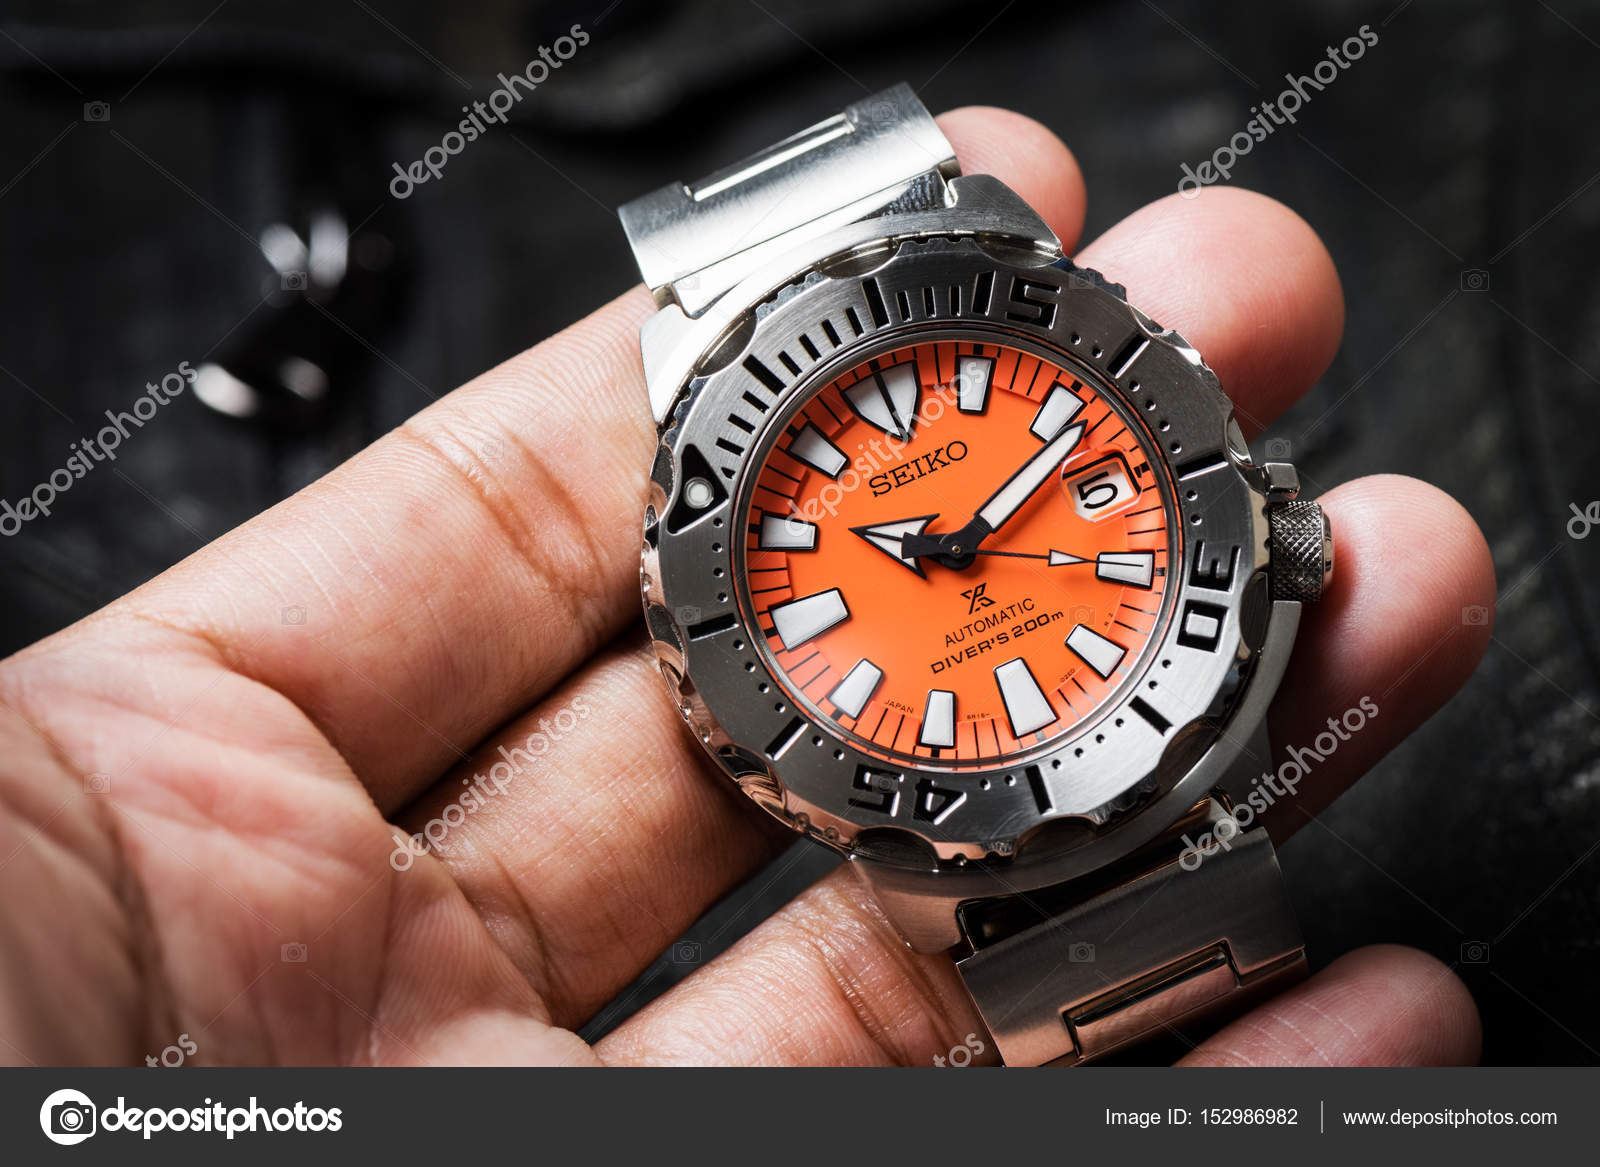 The Seiko wristwatch – Stock Editorial Photo © norgallery #152986982